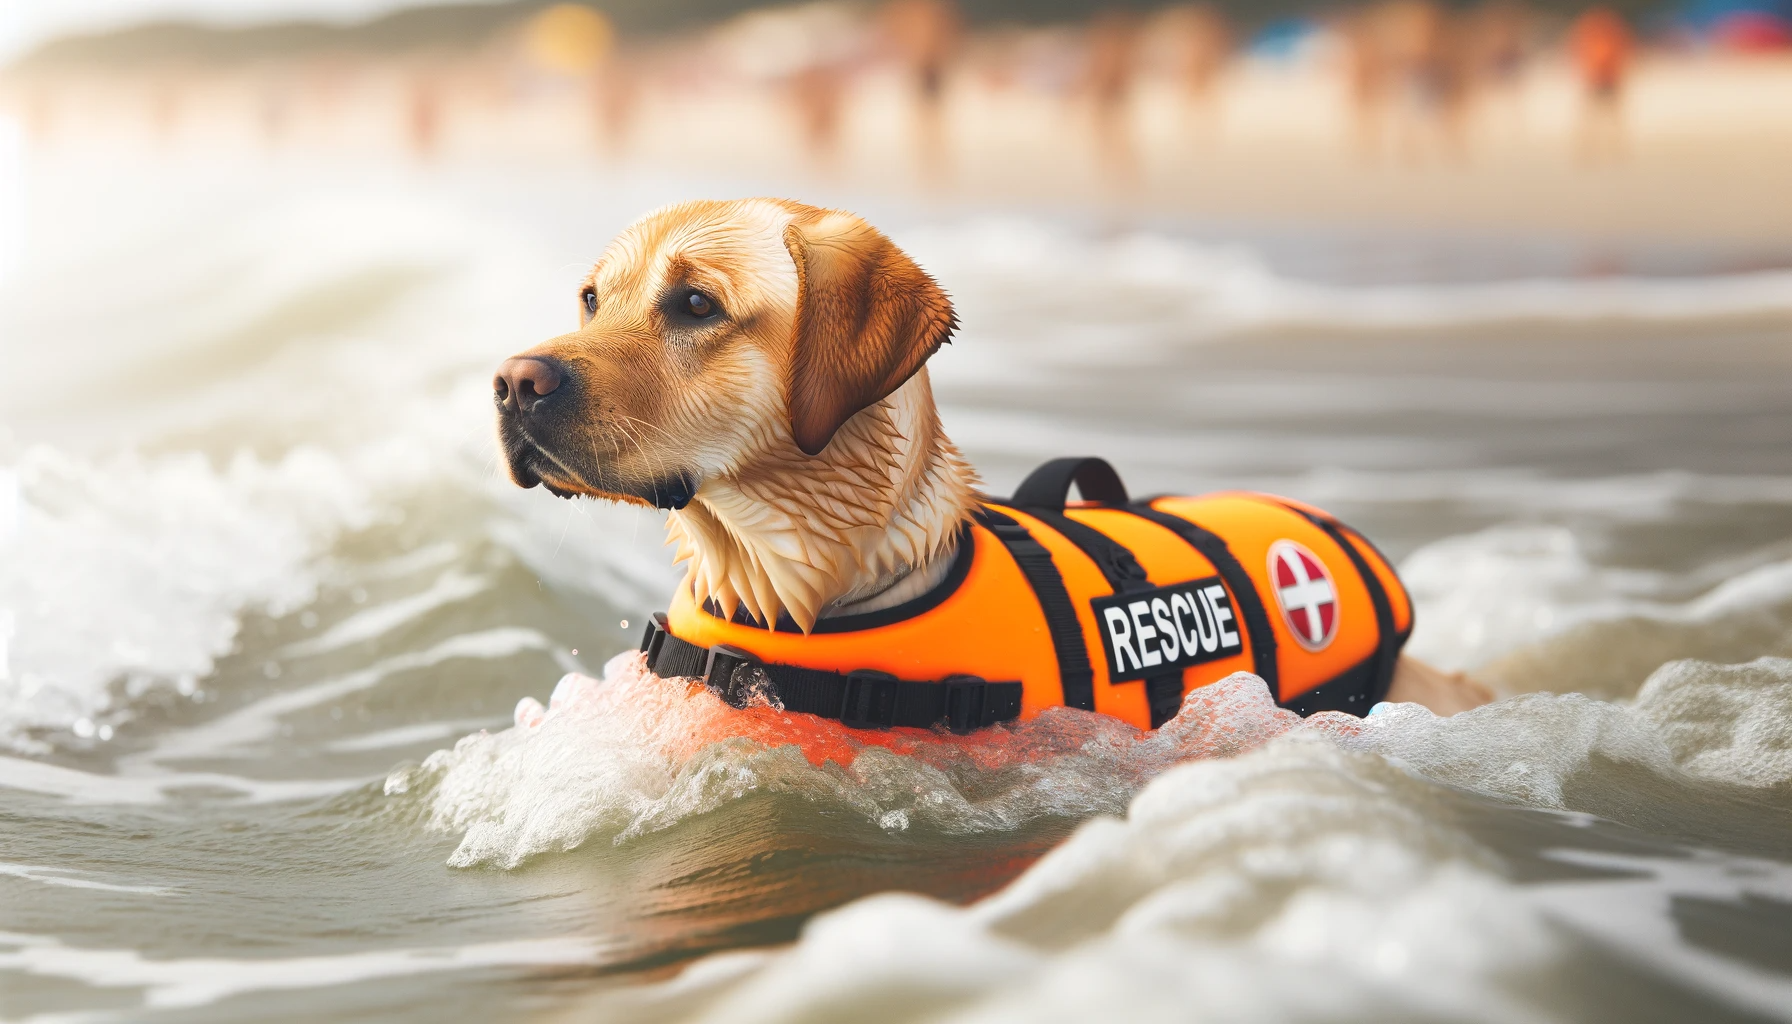 Labrador Retriever in a lifesaver vest during a rescue mission